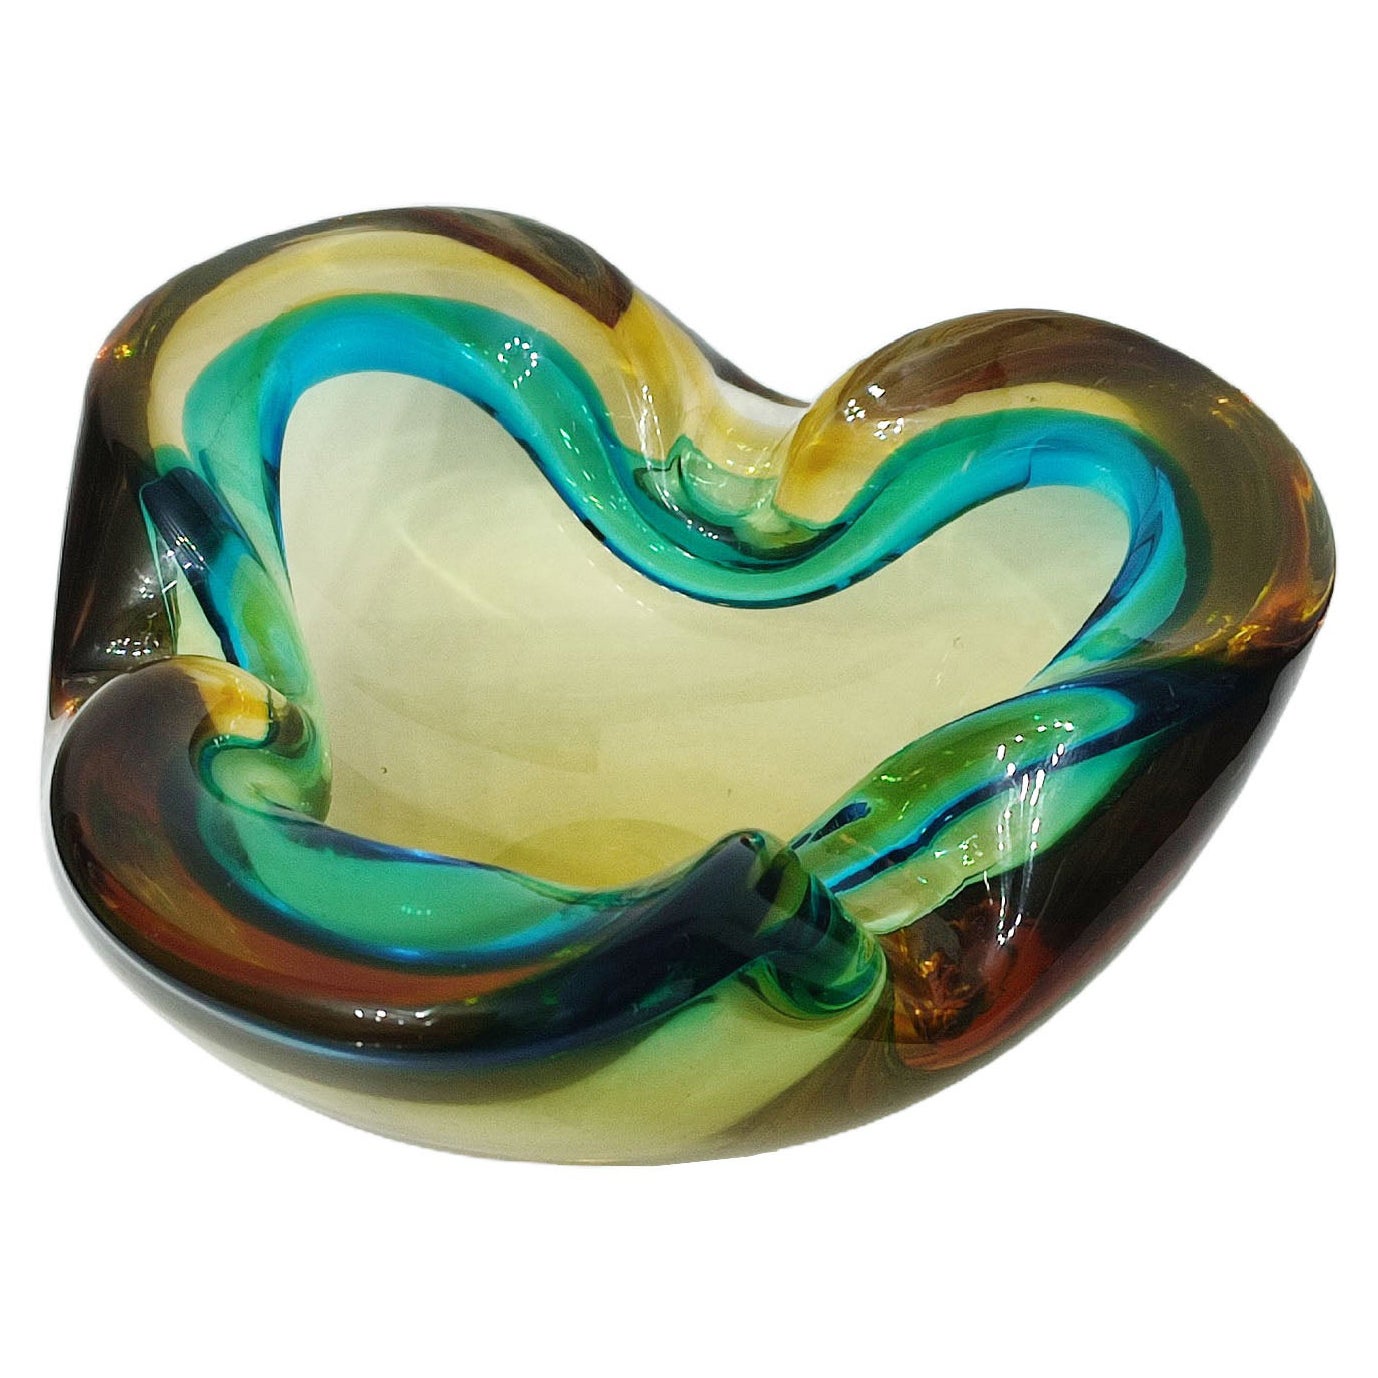 Schweres Murano-Glas "Amber-Teal" Schalen-Aschenbecher Murano, Seguso, Italien, 1970er Jahre